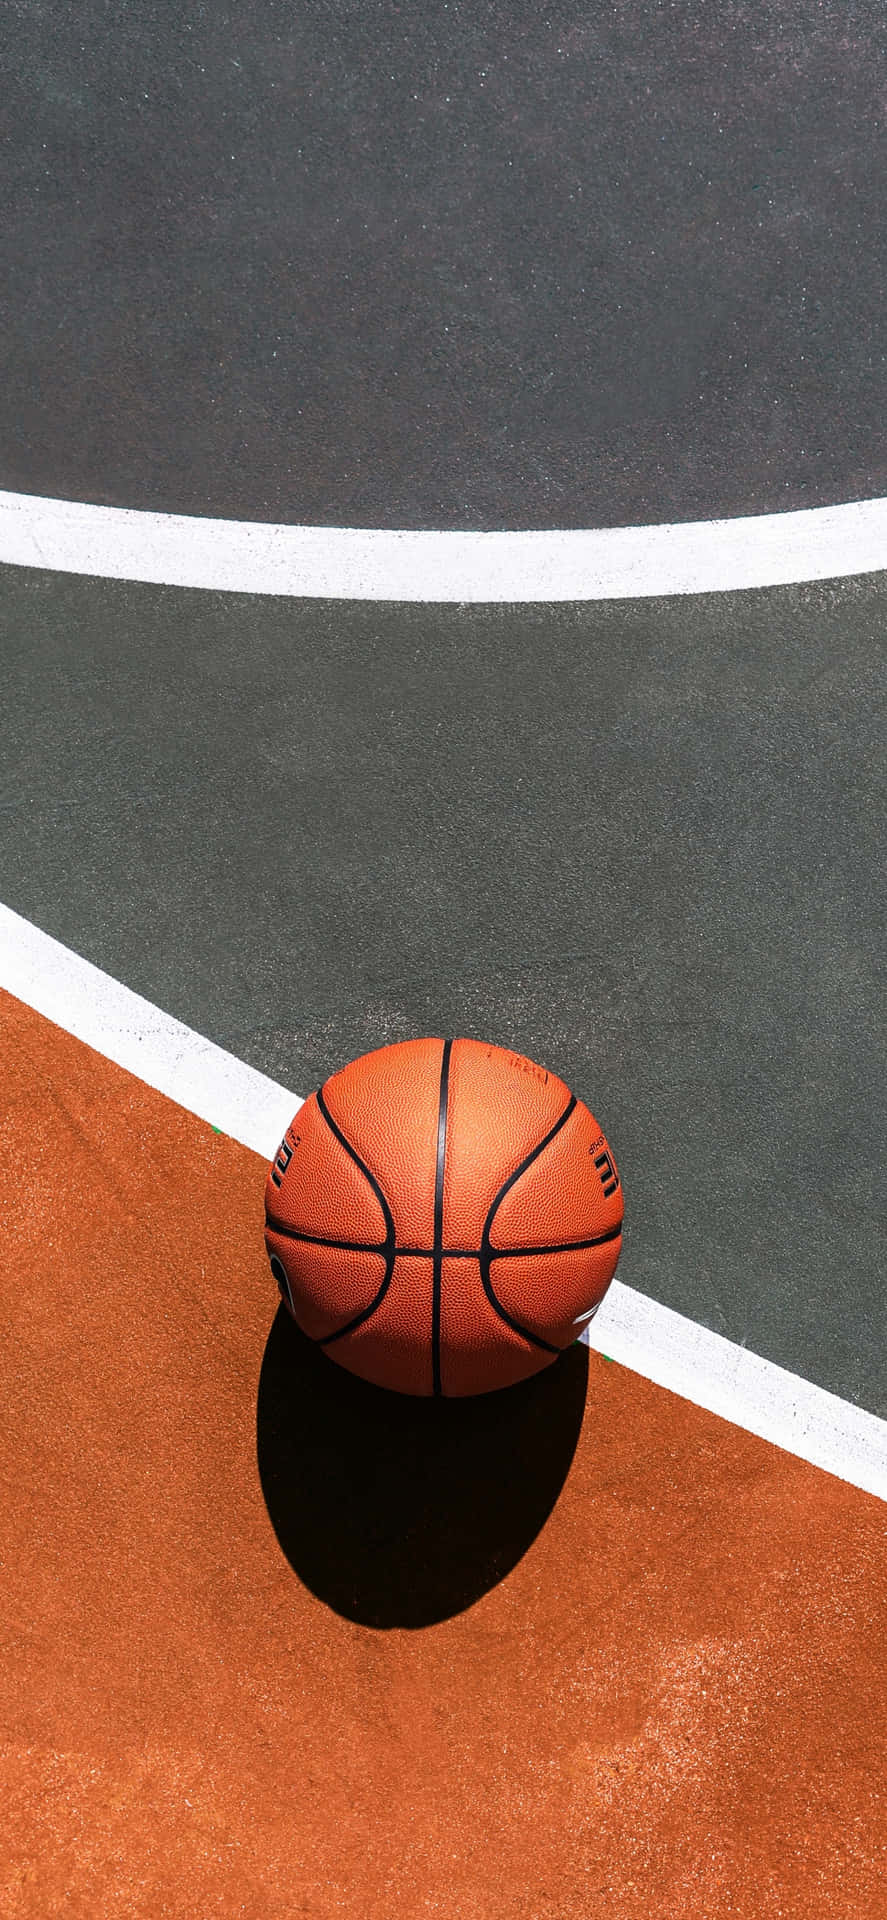 Iphone Xs Basketball Background Wallpaper